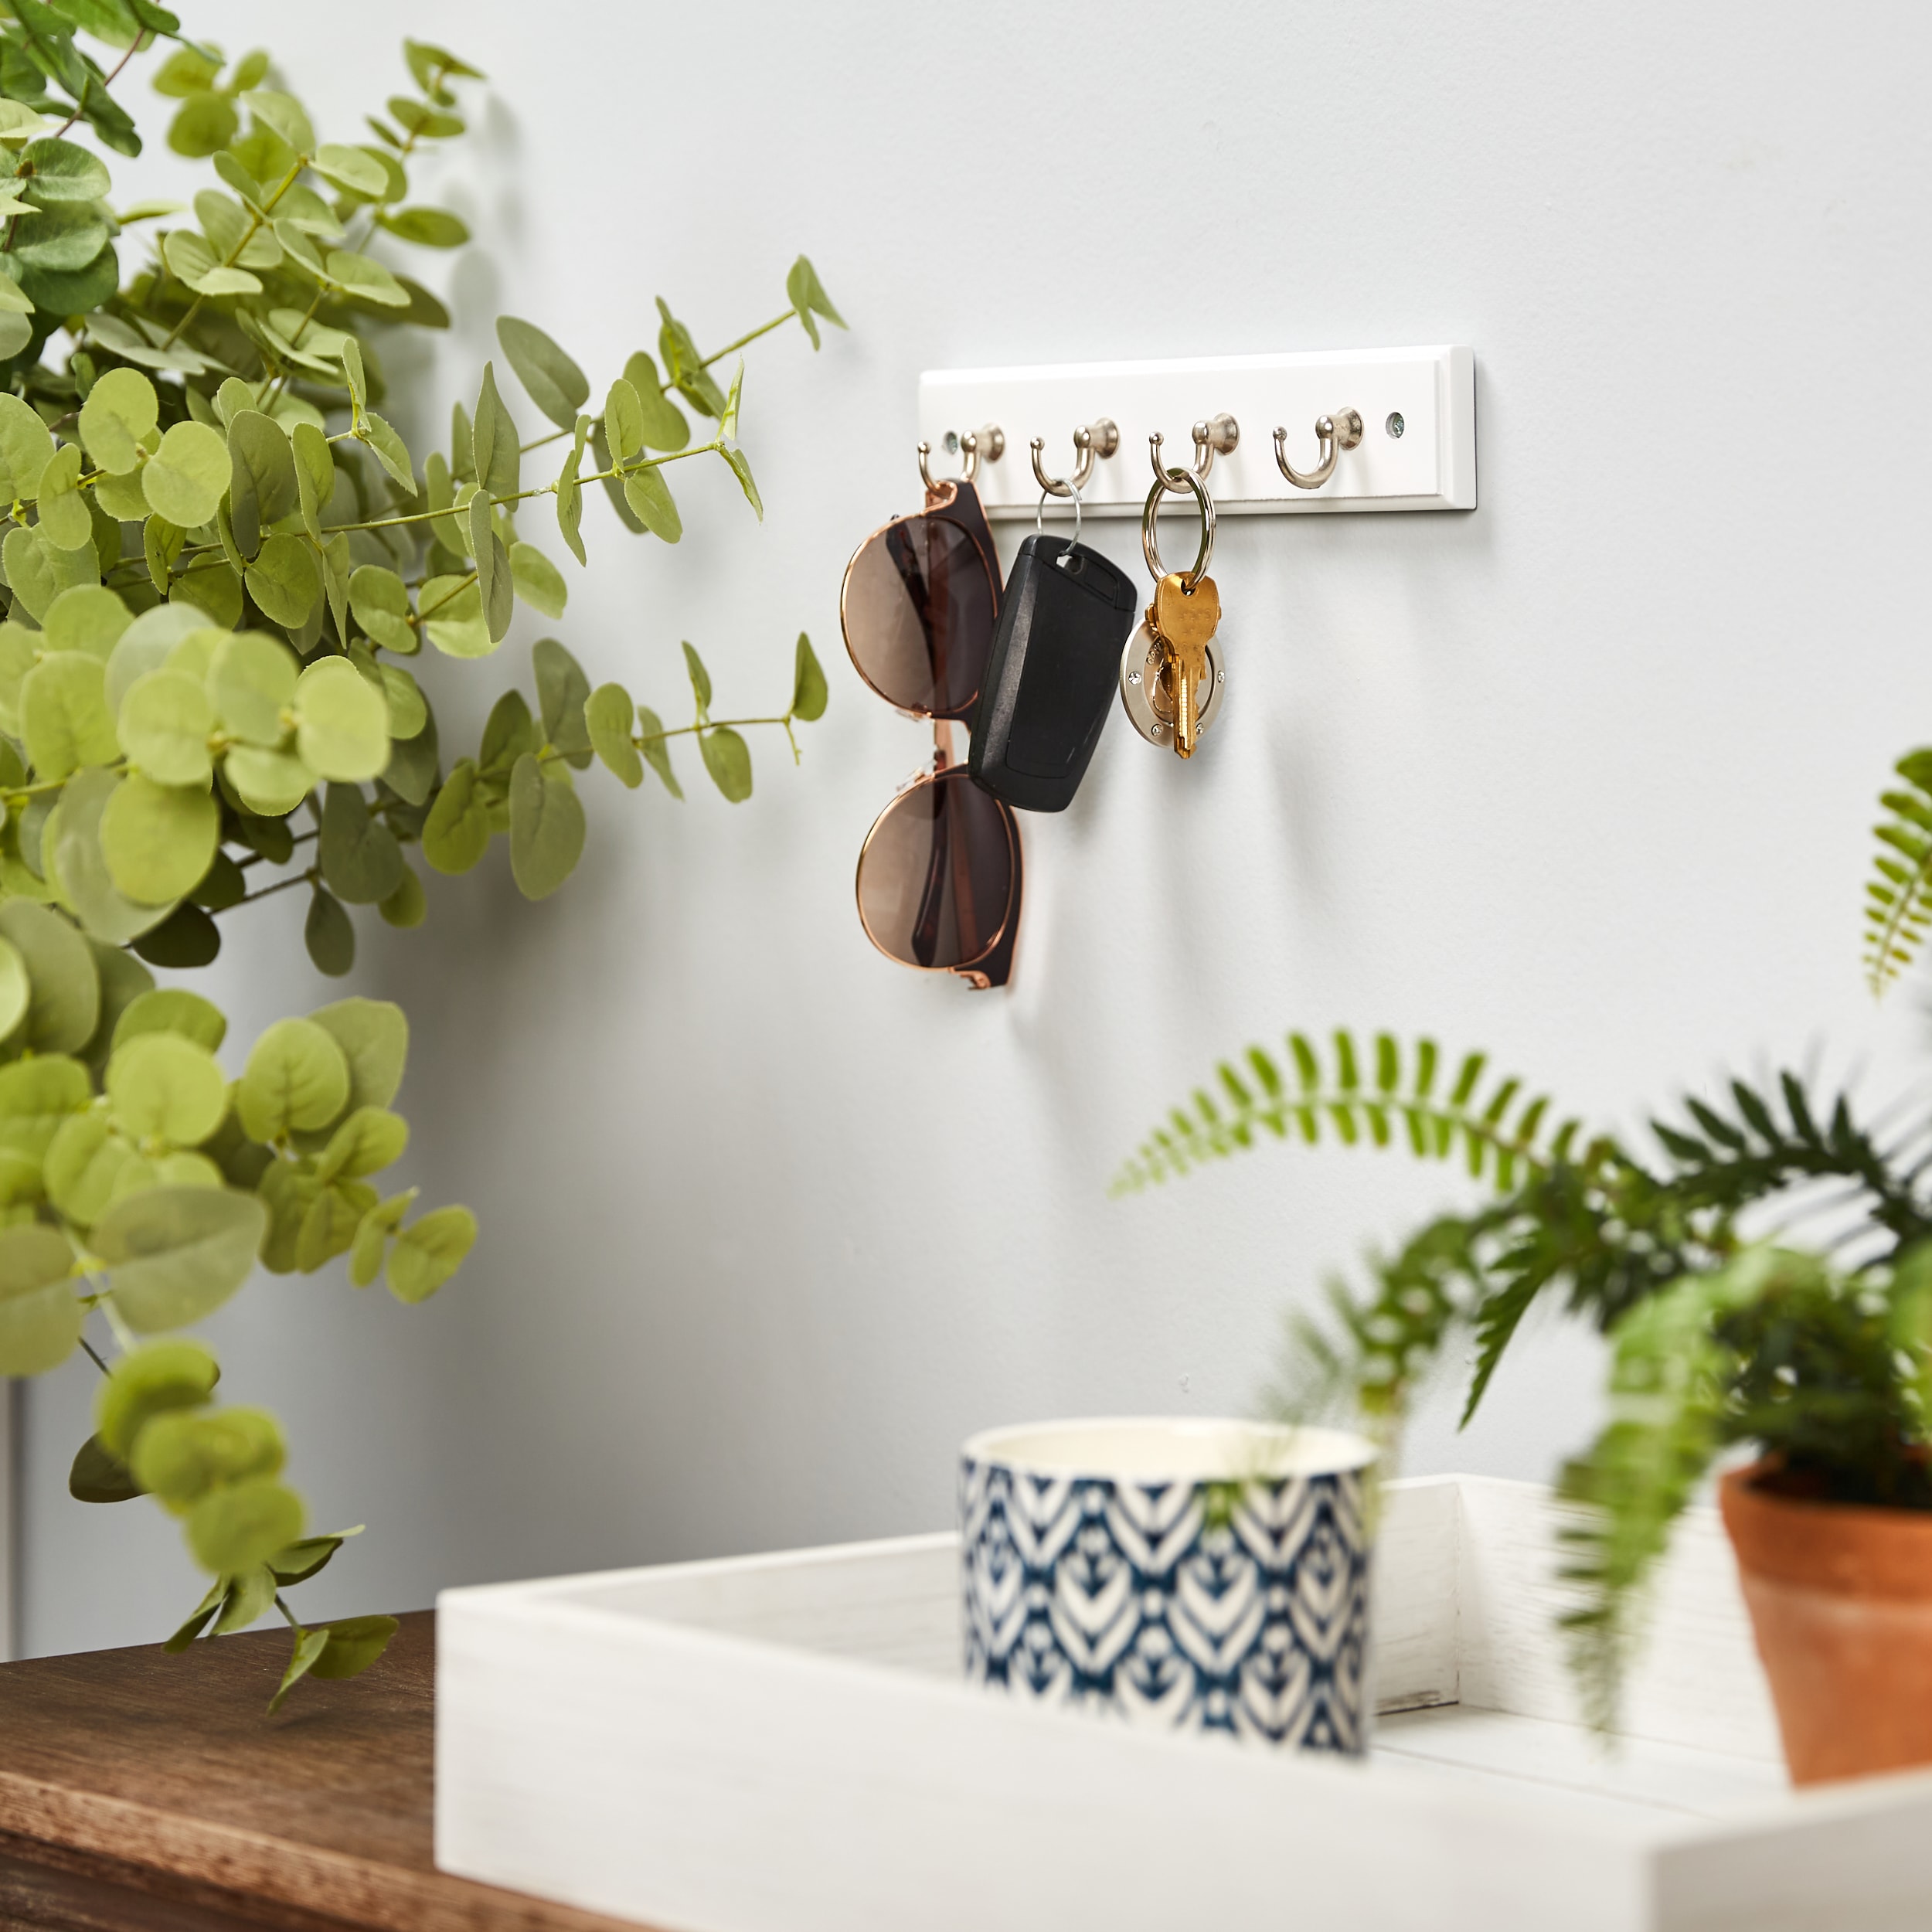 Decorative Wall Hooks: My 16 Favorites!  Decorative wall hooks, Driven by  decor, Wall hooks